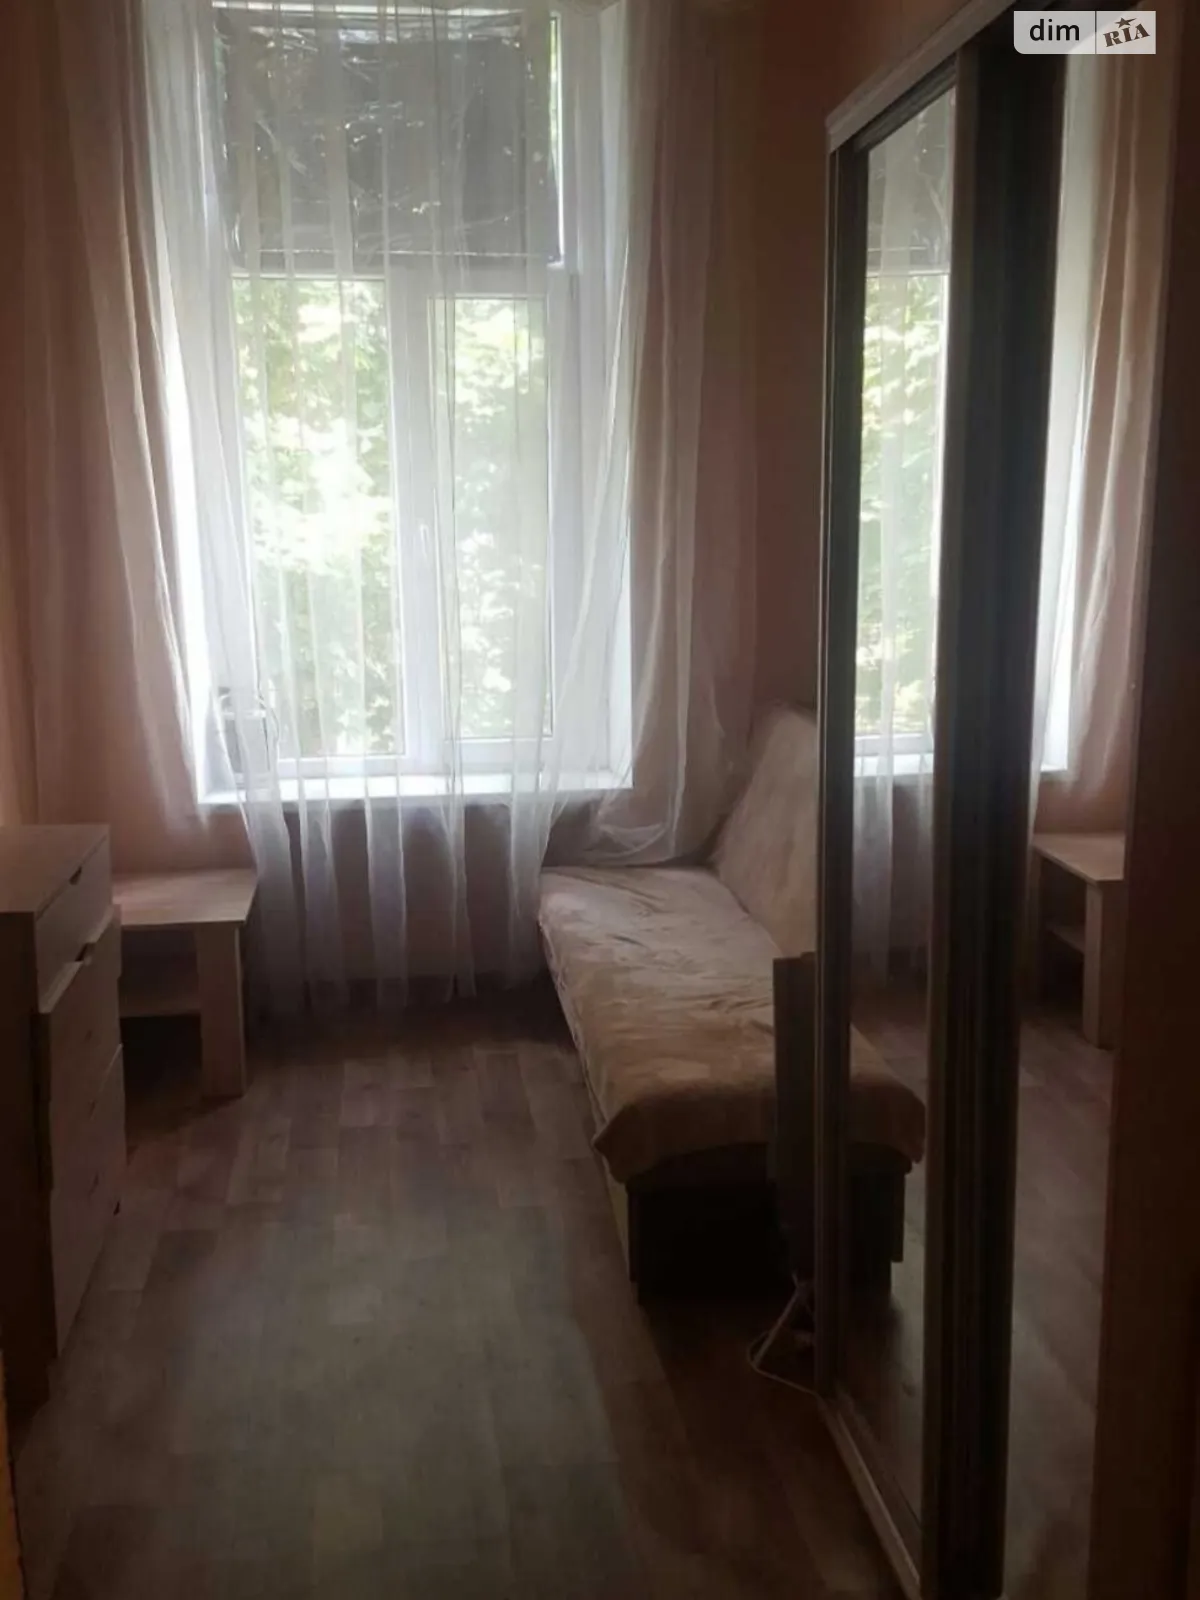 Продается комната 20 кв. м в Одессе, цена: 15000 $ - фото 1